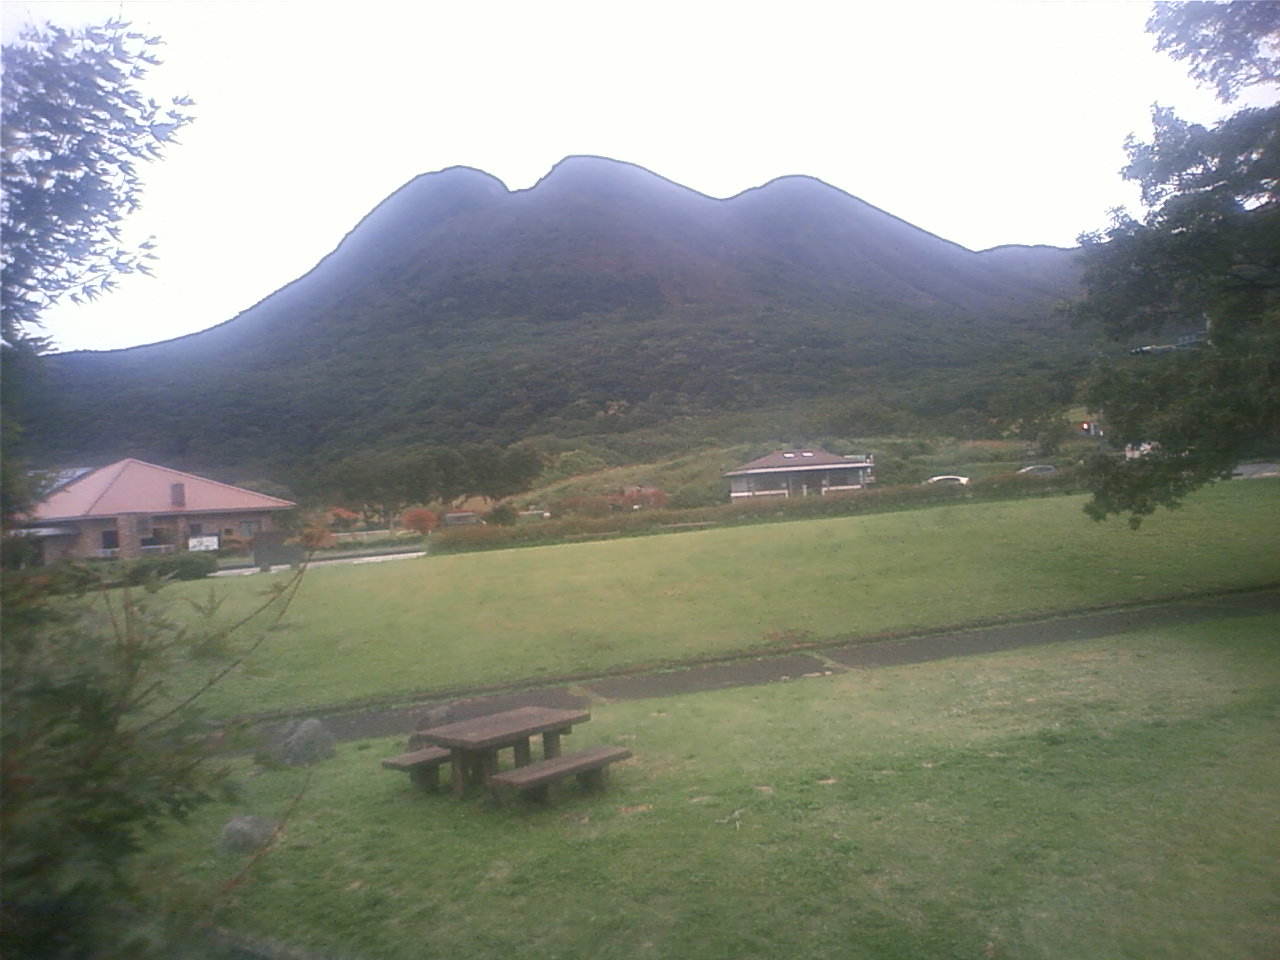 Mt. Mimata as viewed from Chojabaru